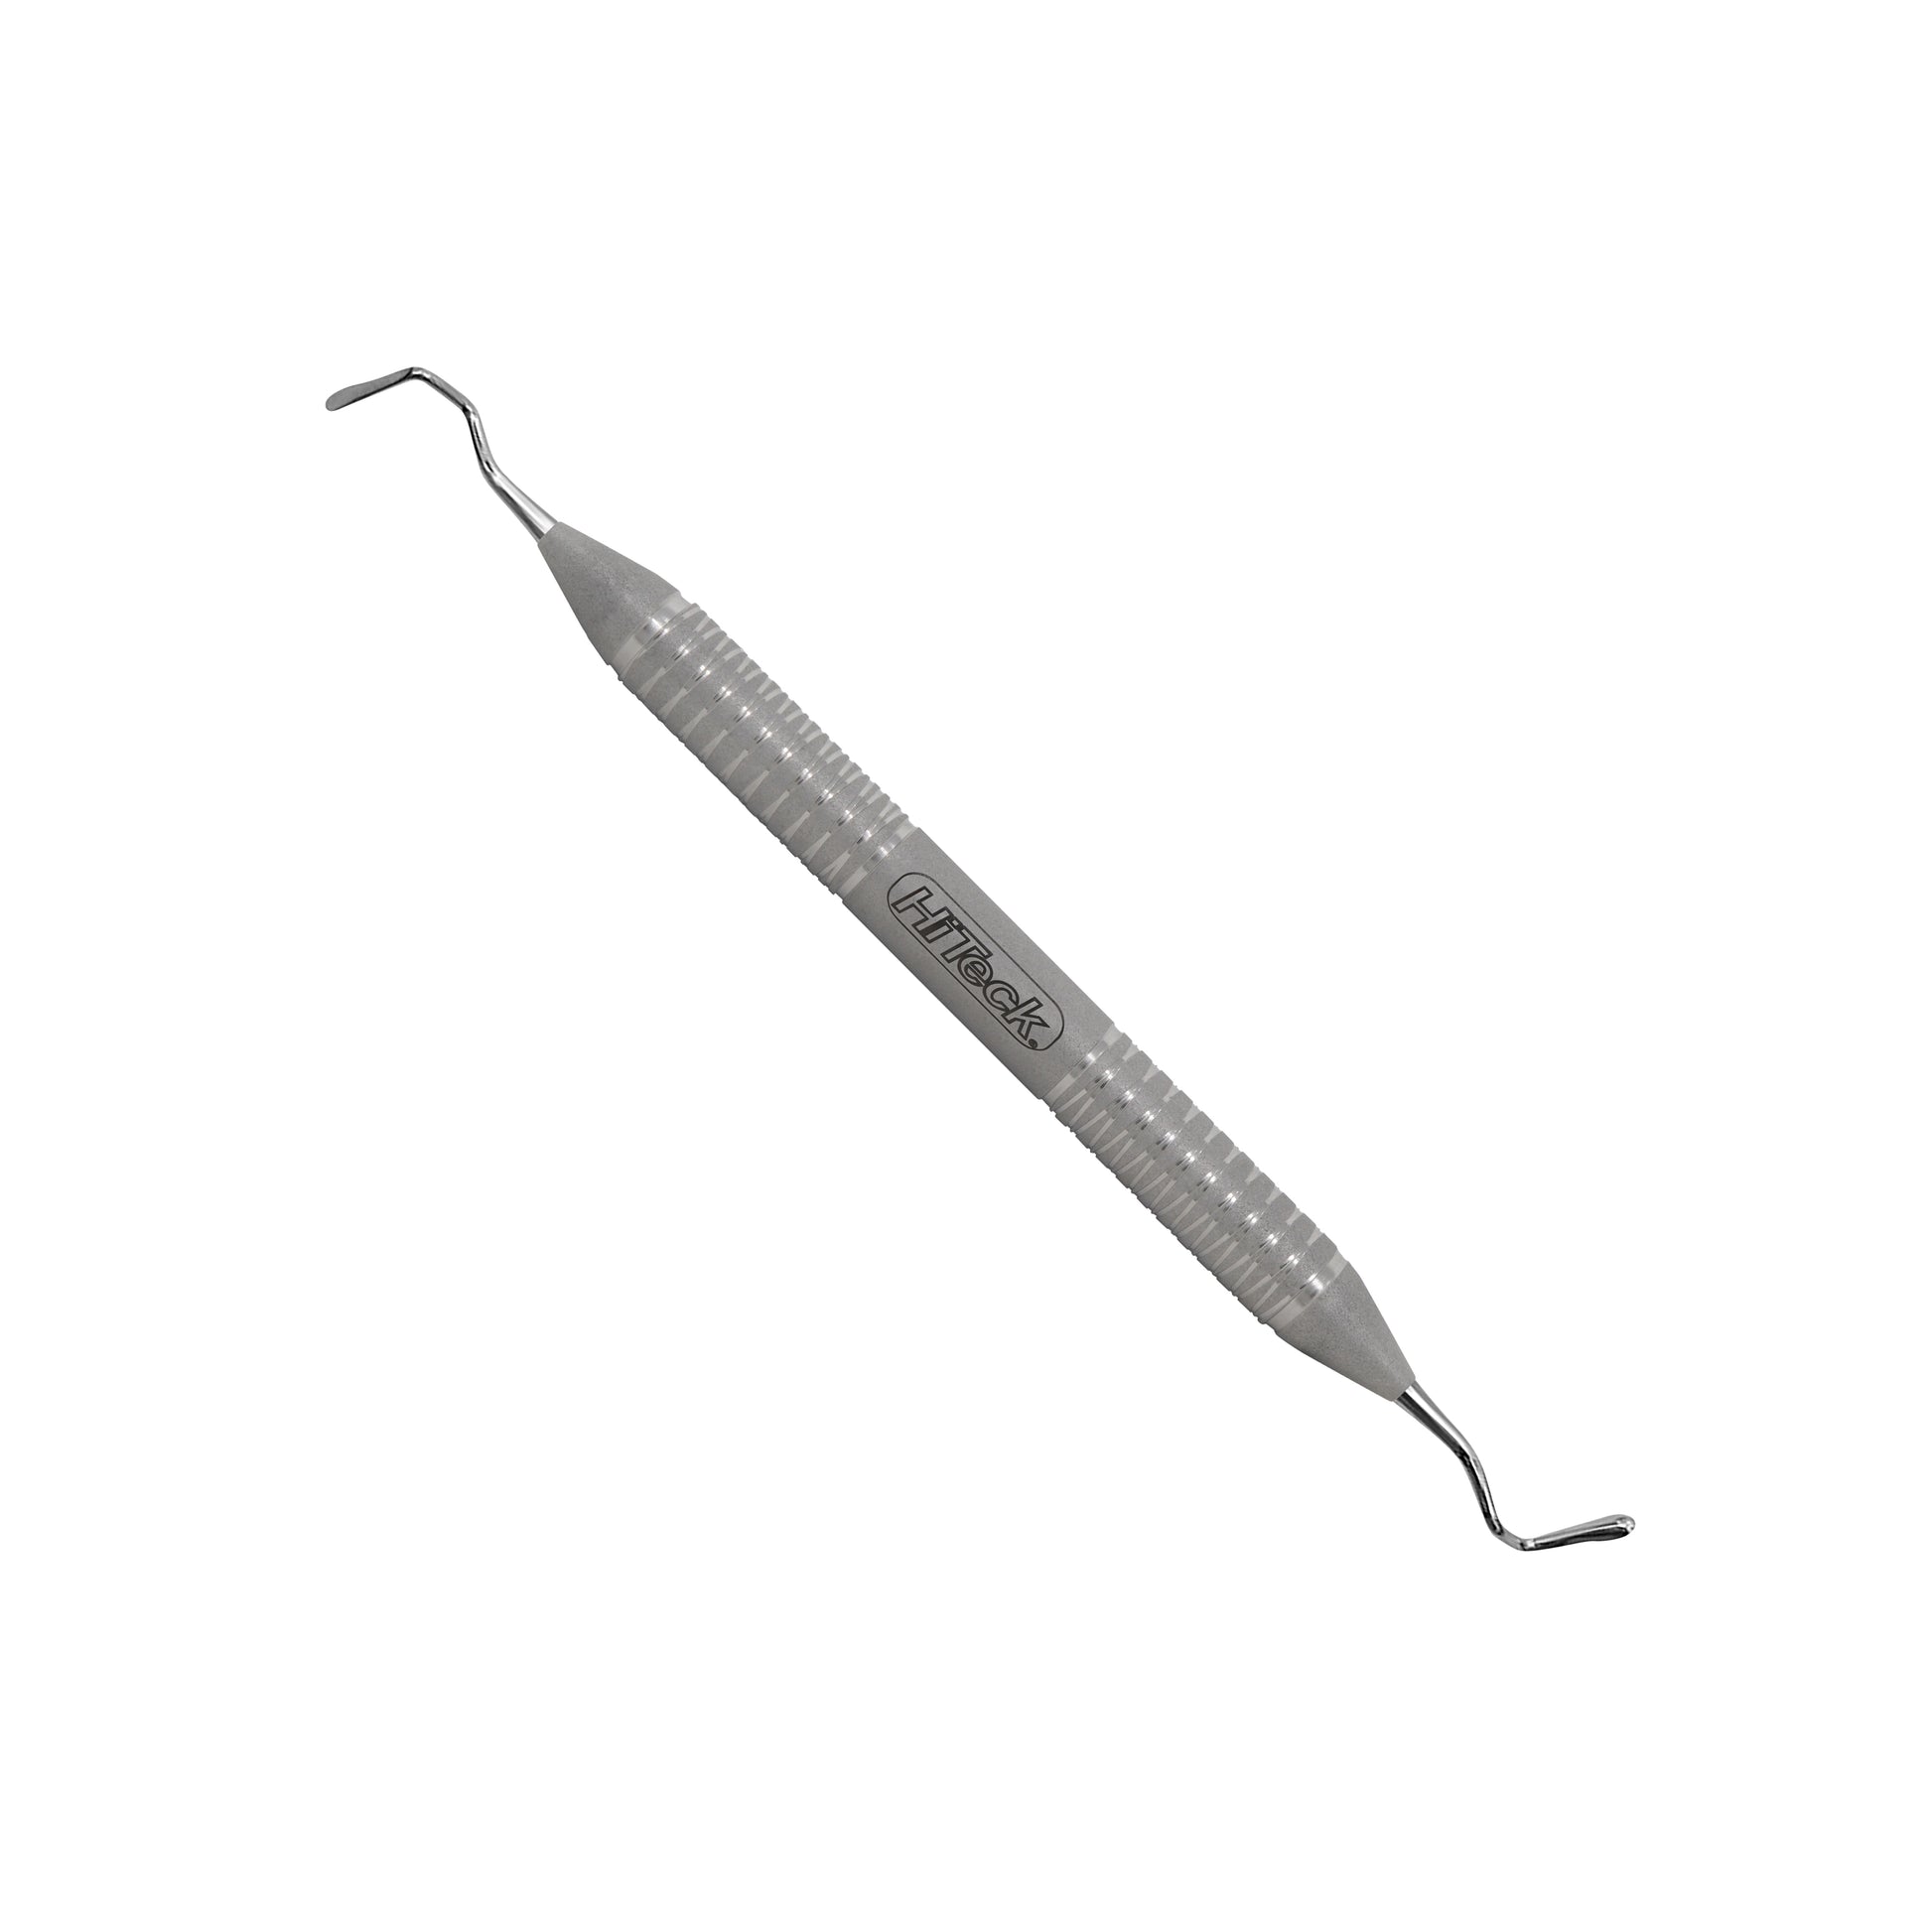 2 Reddy Thin Periodontal Knife - HiTeck Medical Instruments